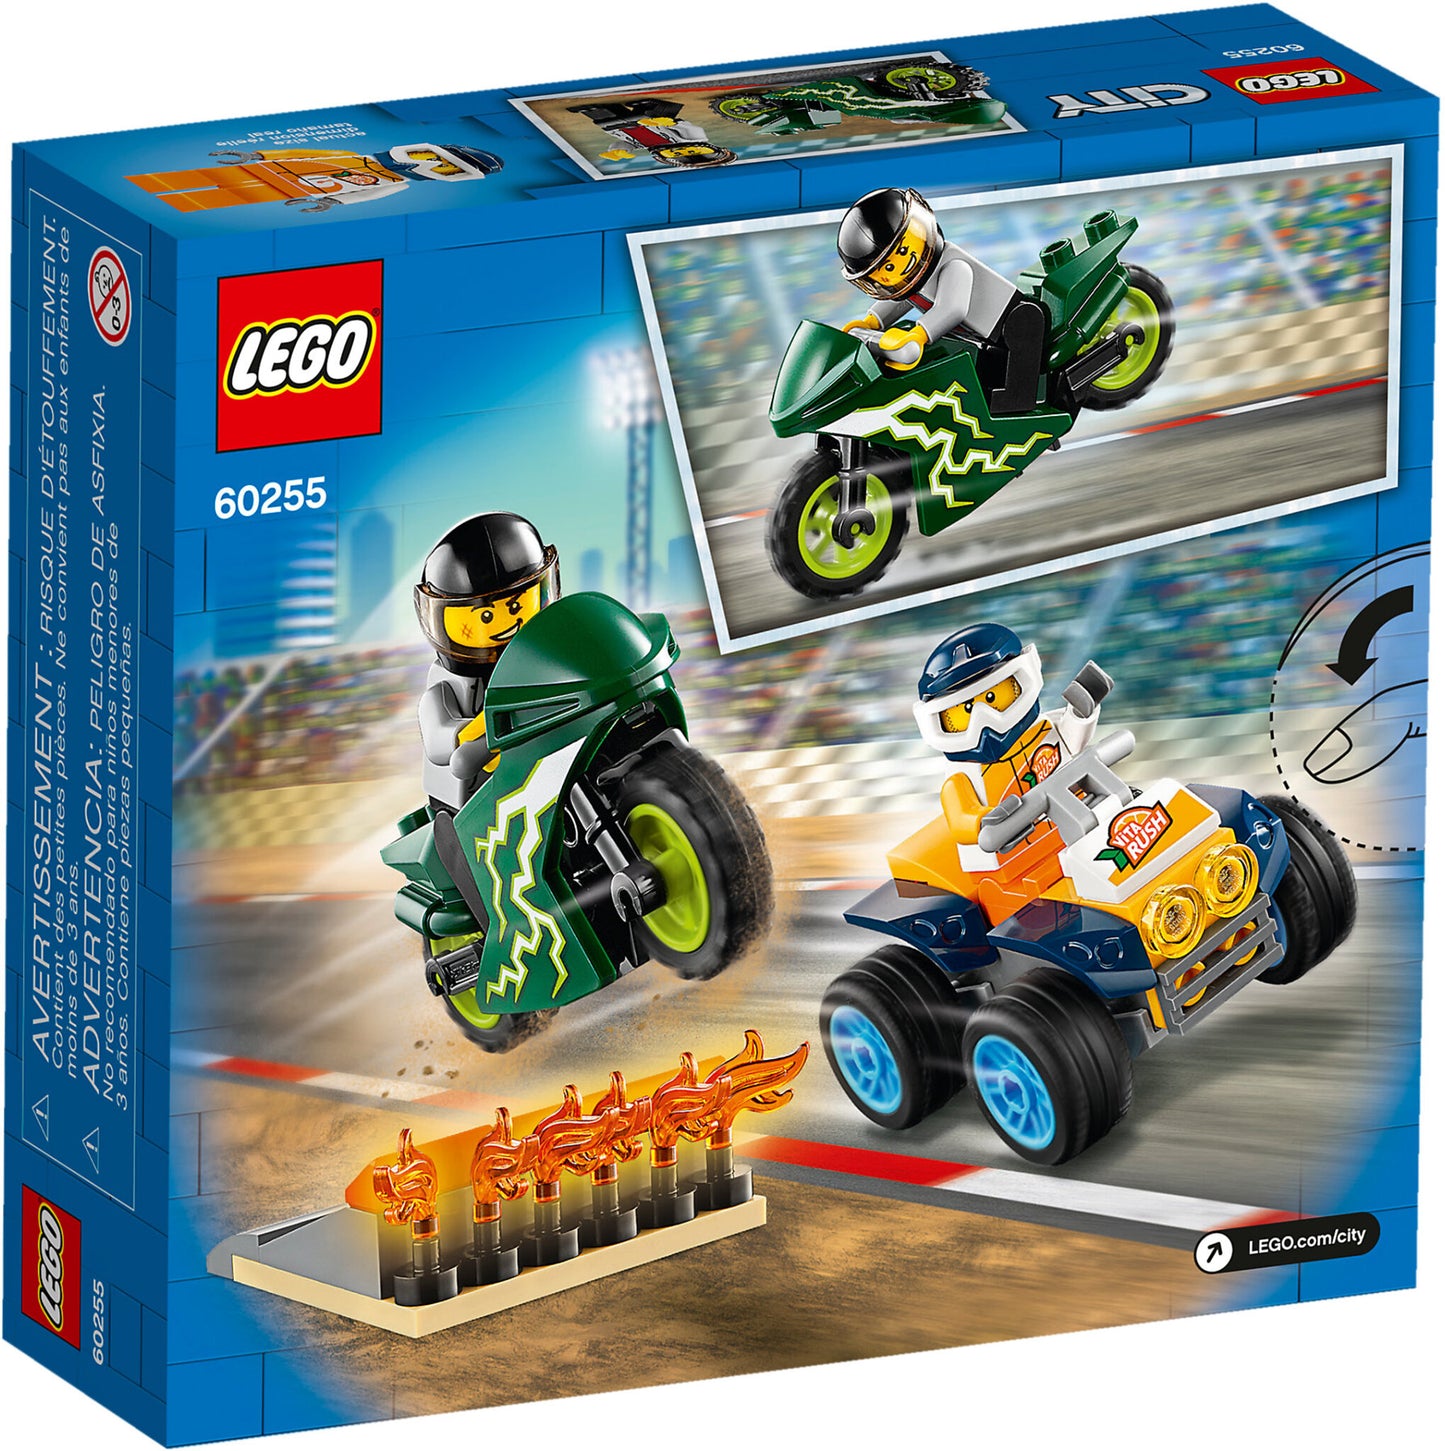 60255 LEGO City - Team Acrobatico